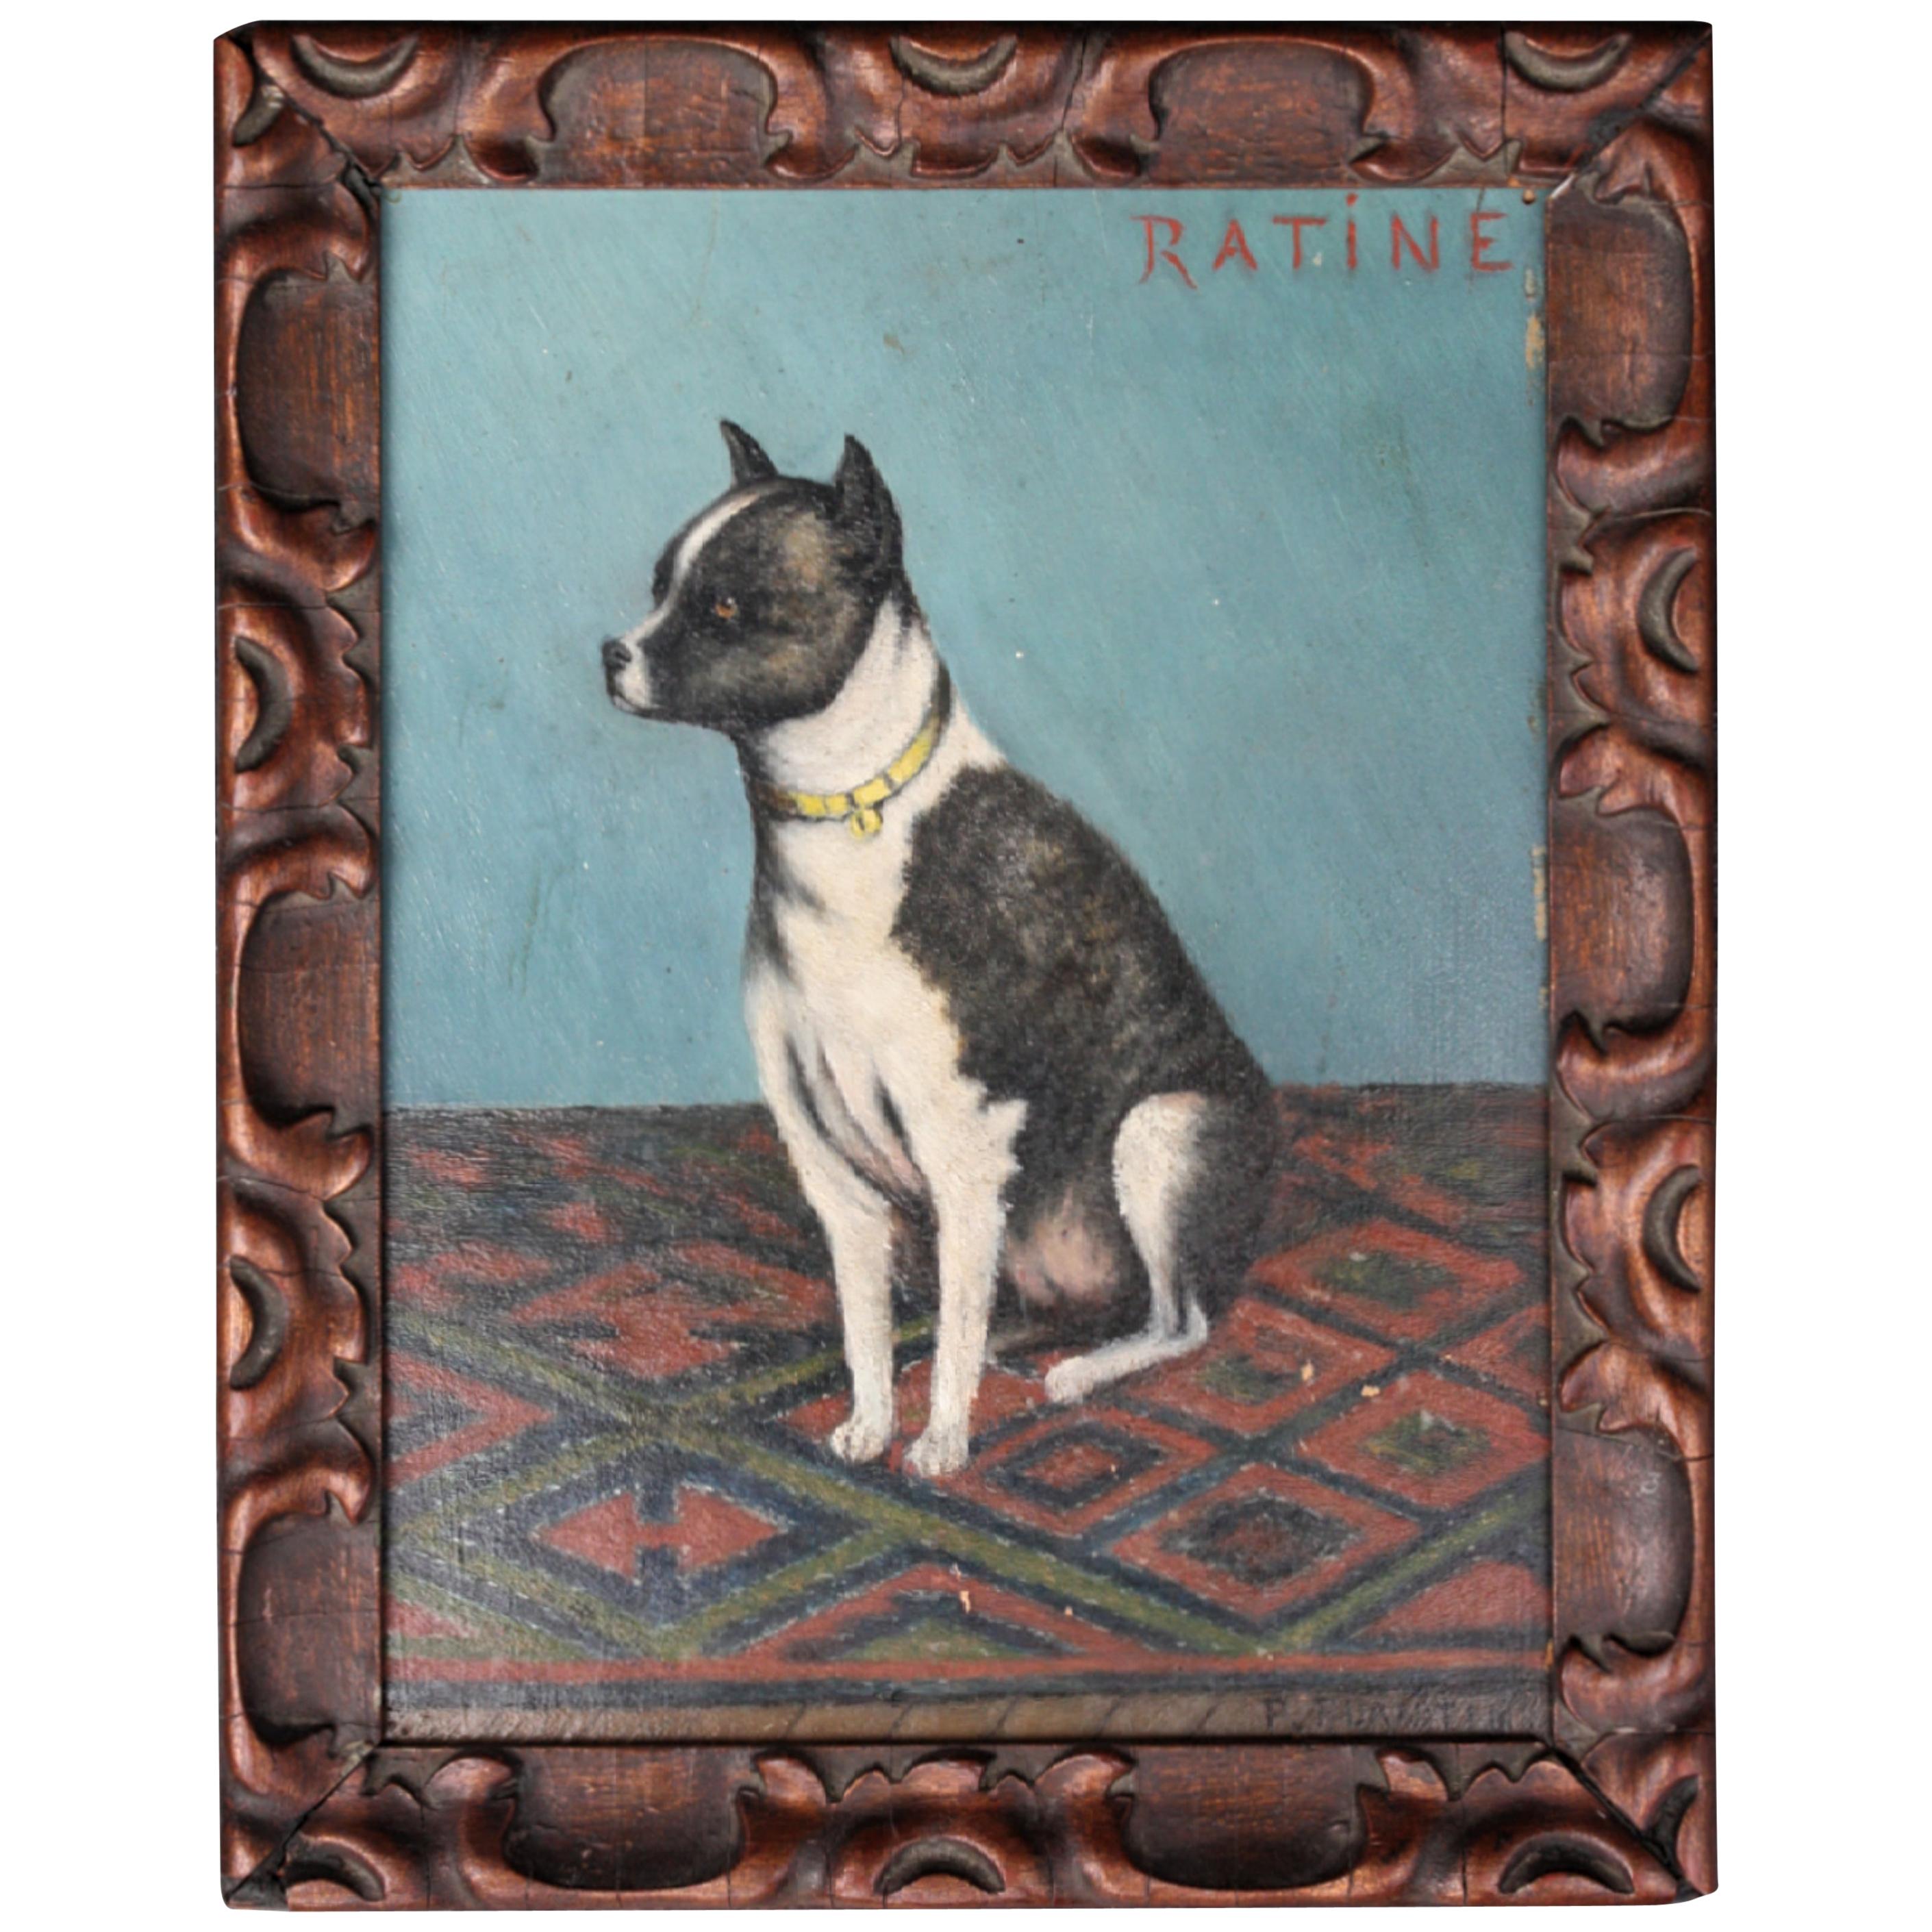 Early 20th Century Folk Art Staffordshire Bull Terrier Dog Ratine Oil on Board